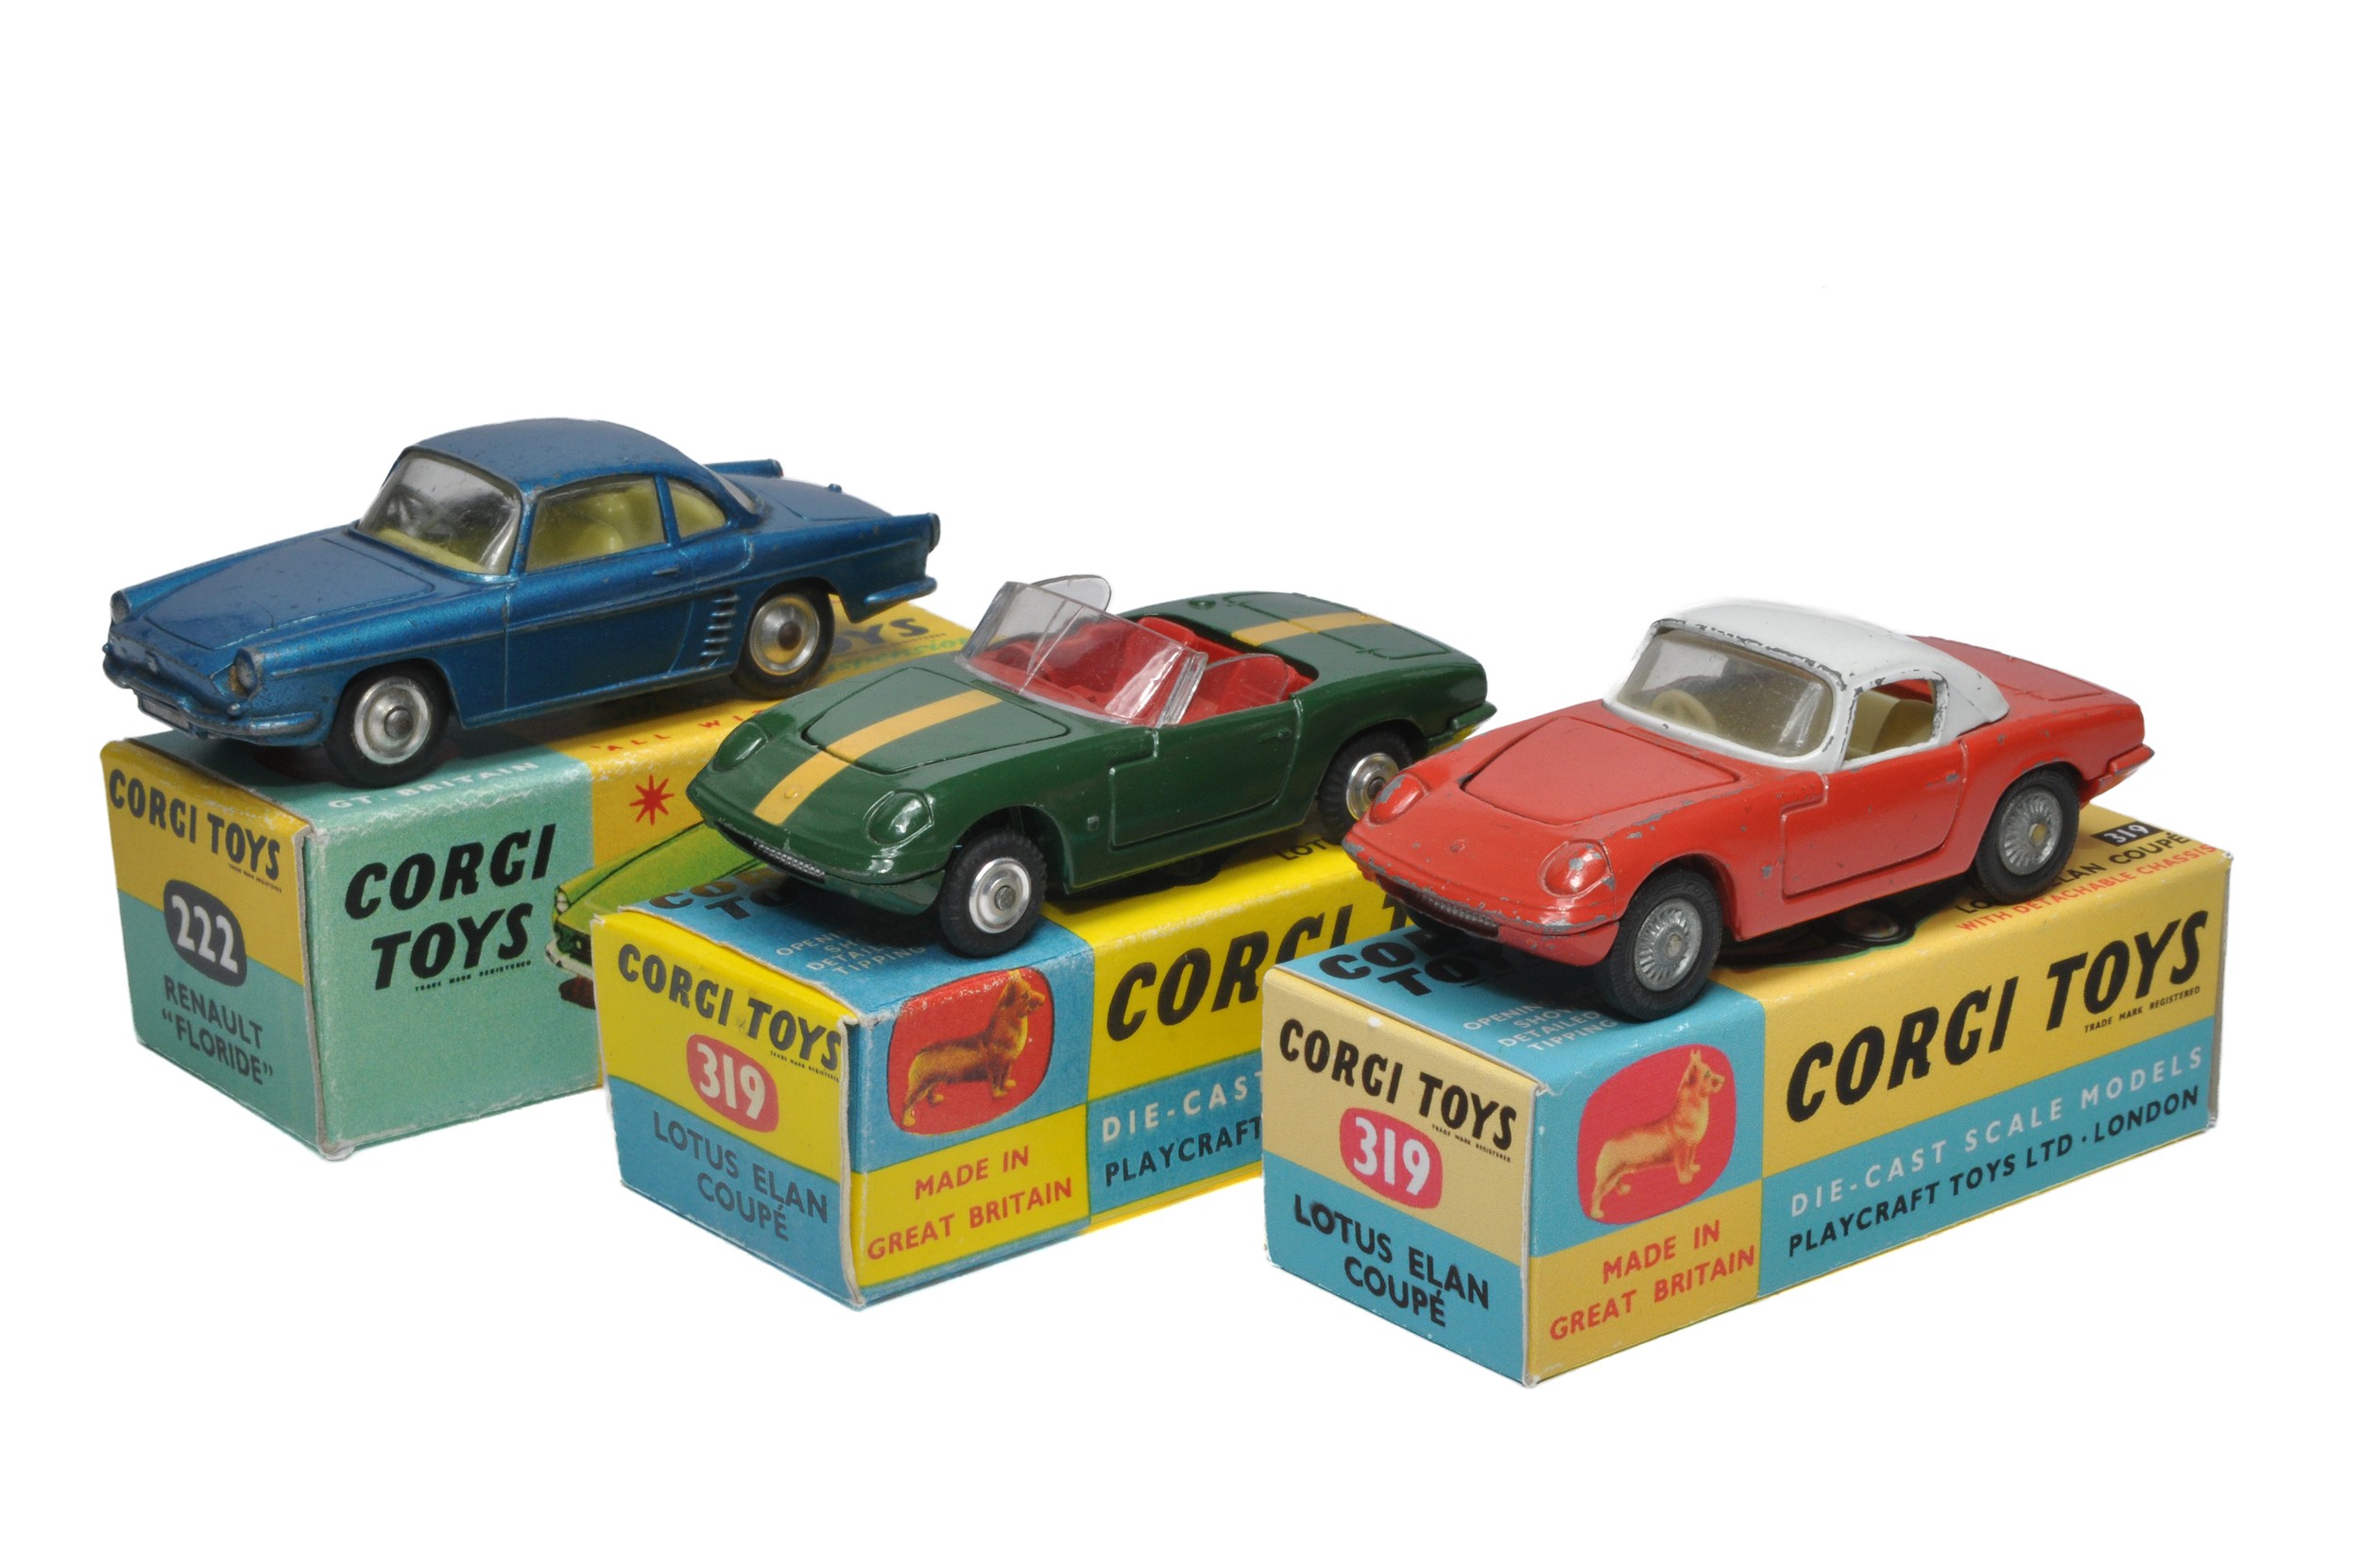 Corgi trio including No. 222 Renault Floride, No. 319 Lotus Elan x 2. Models display generally